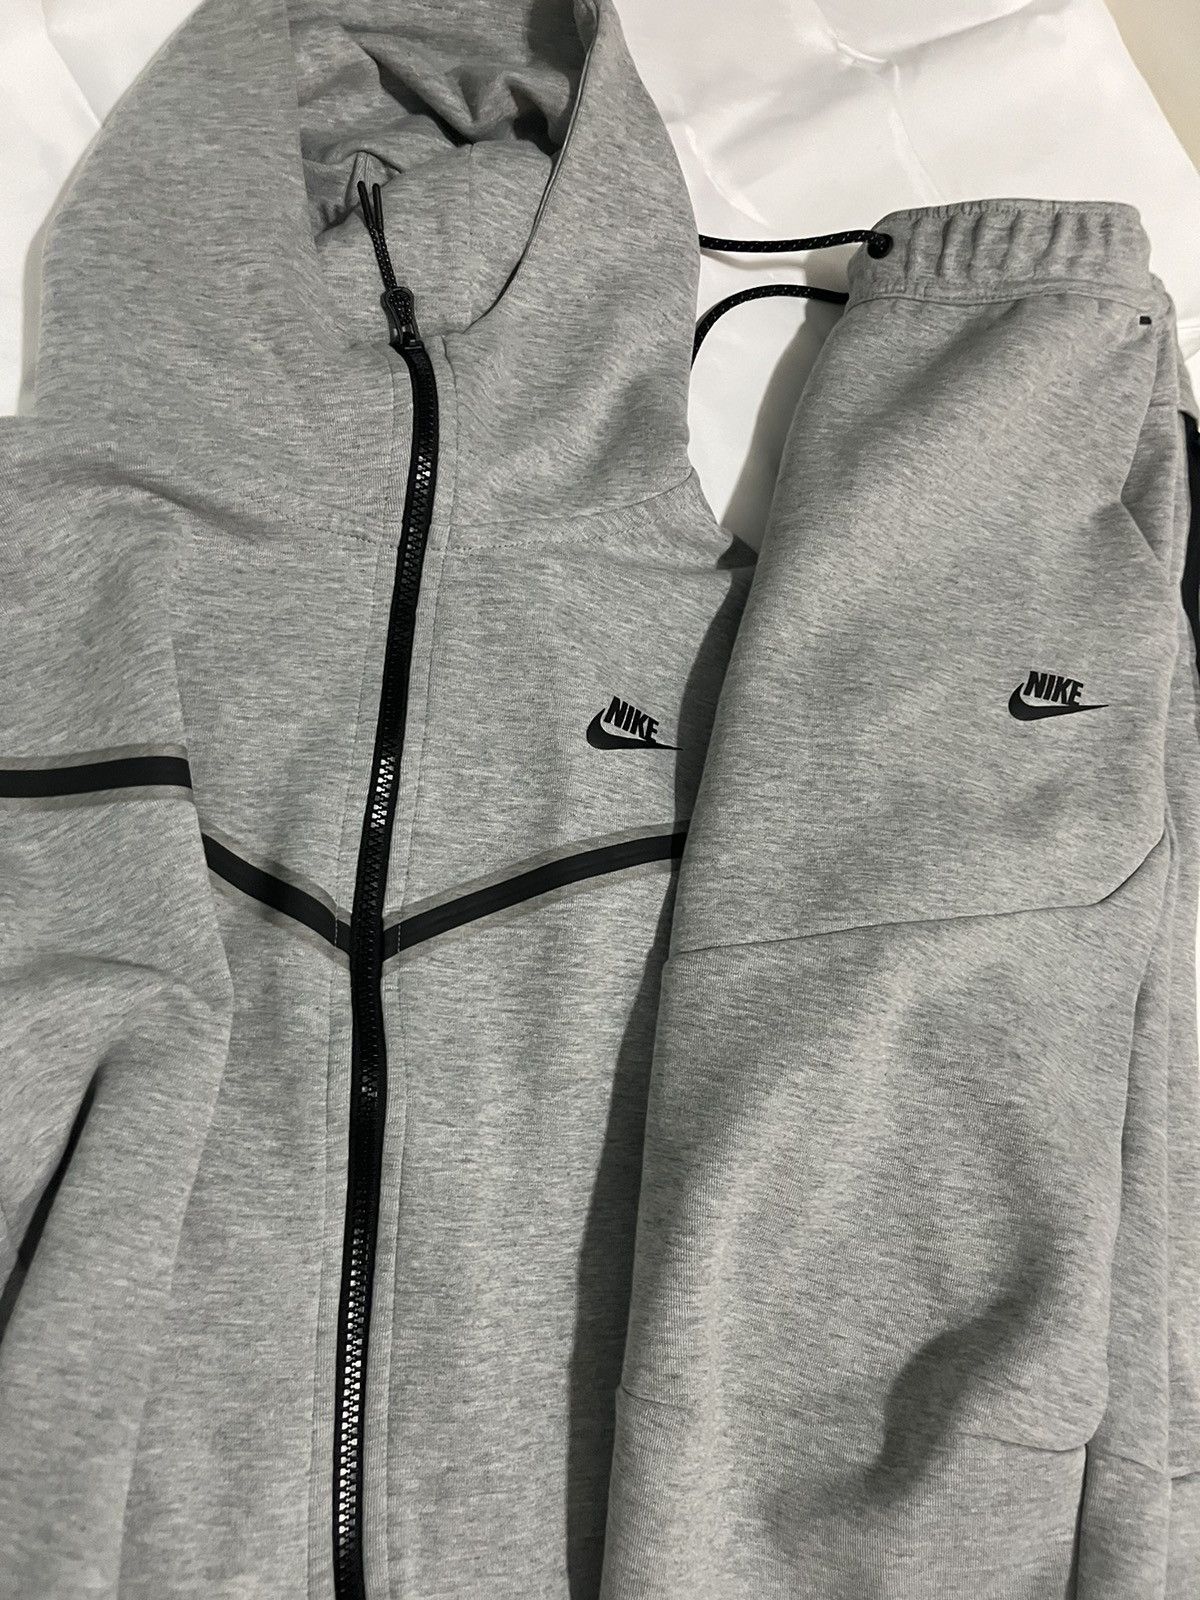 Nike Grey Nike Tech Fleece Set | Grailed